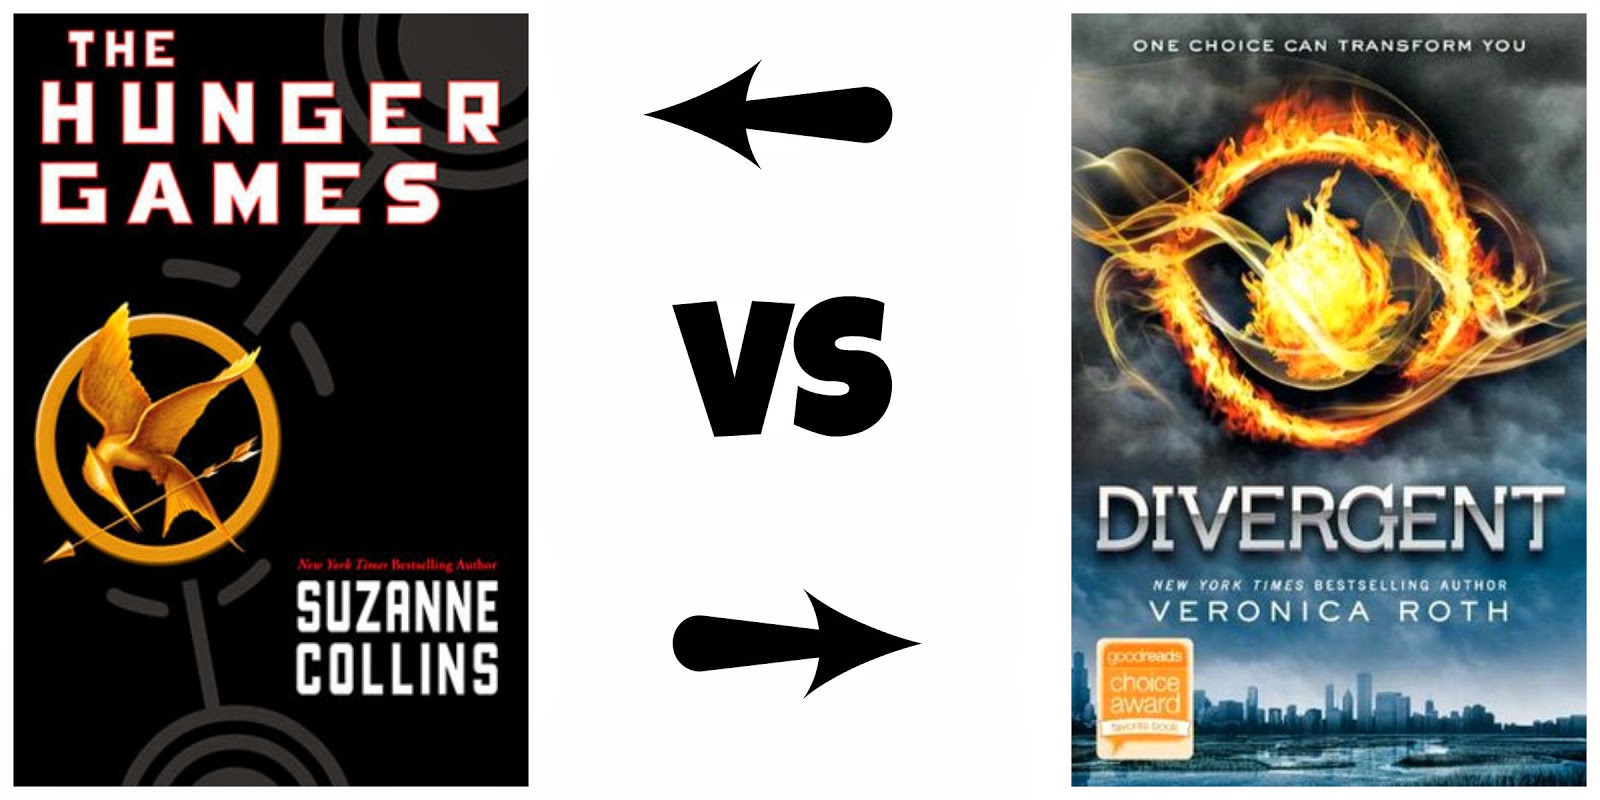 Divergent Vs Hunger Games Comparison